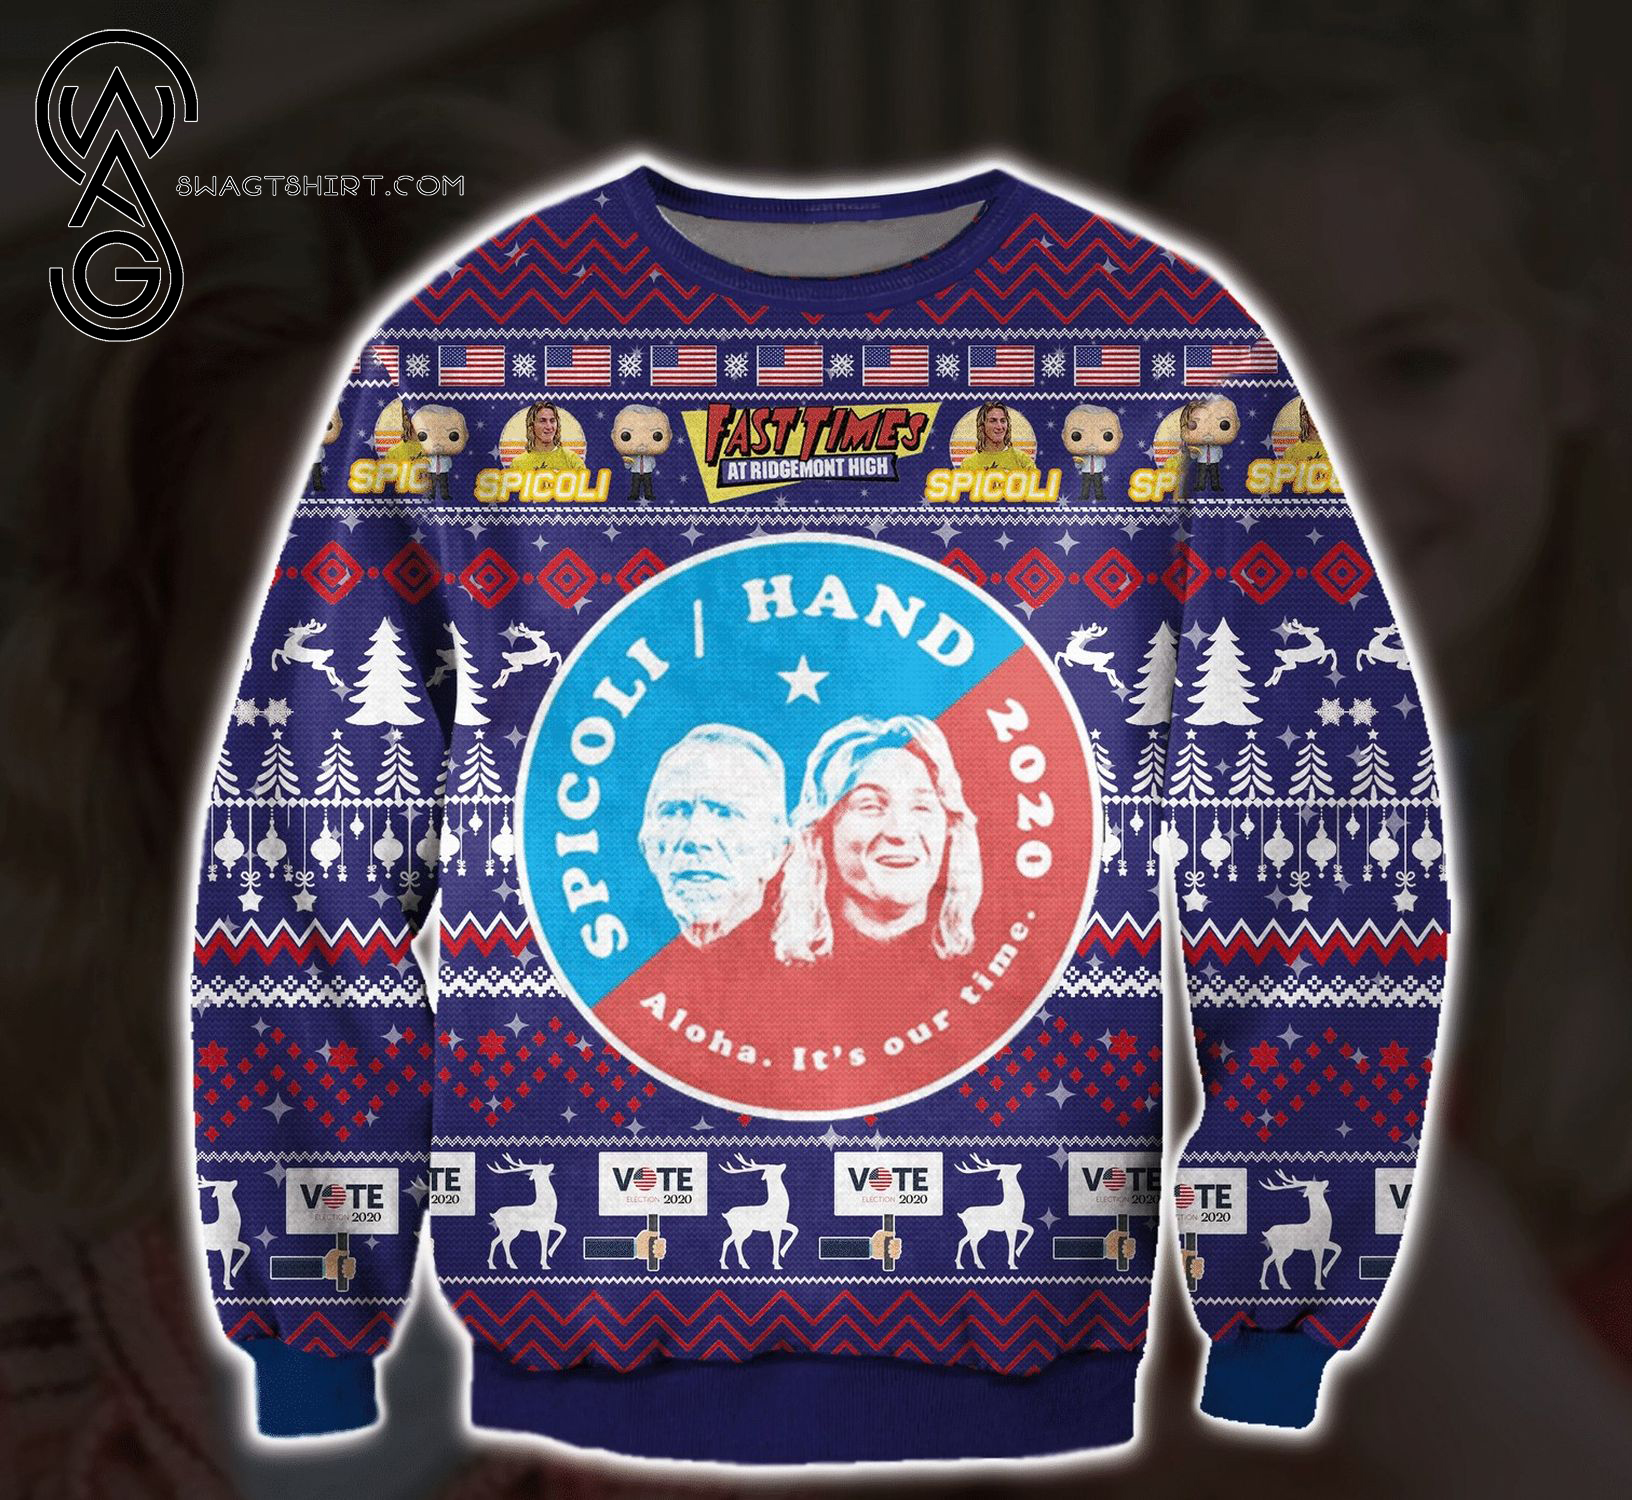 Spicoli Hand 2020 Aloha It's Our Time Full Print Ugly Christmas Sweater